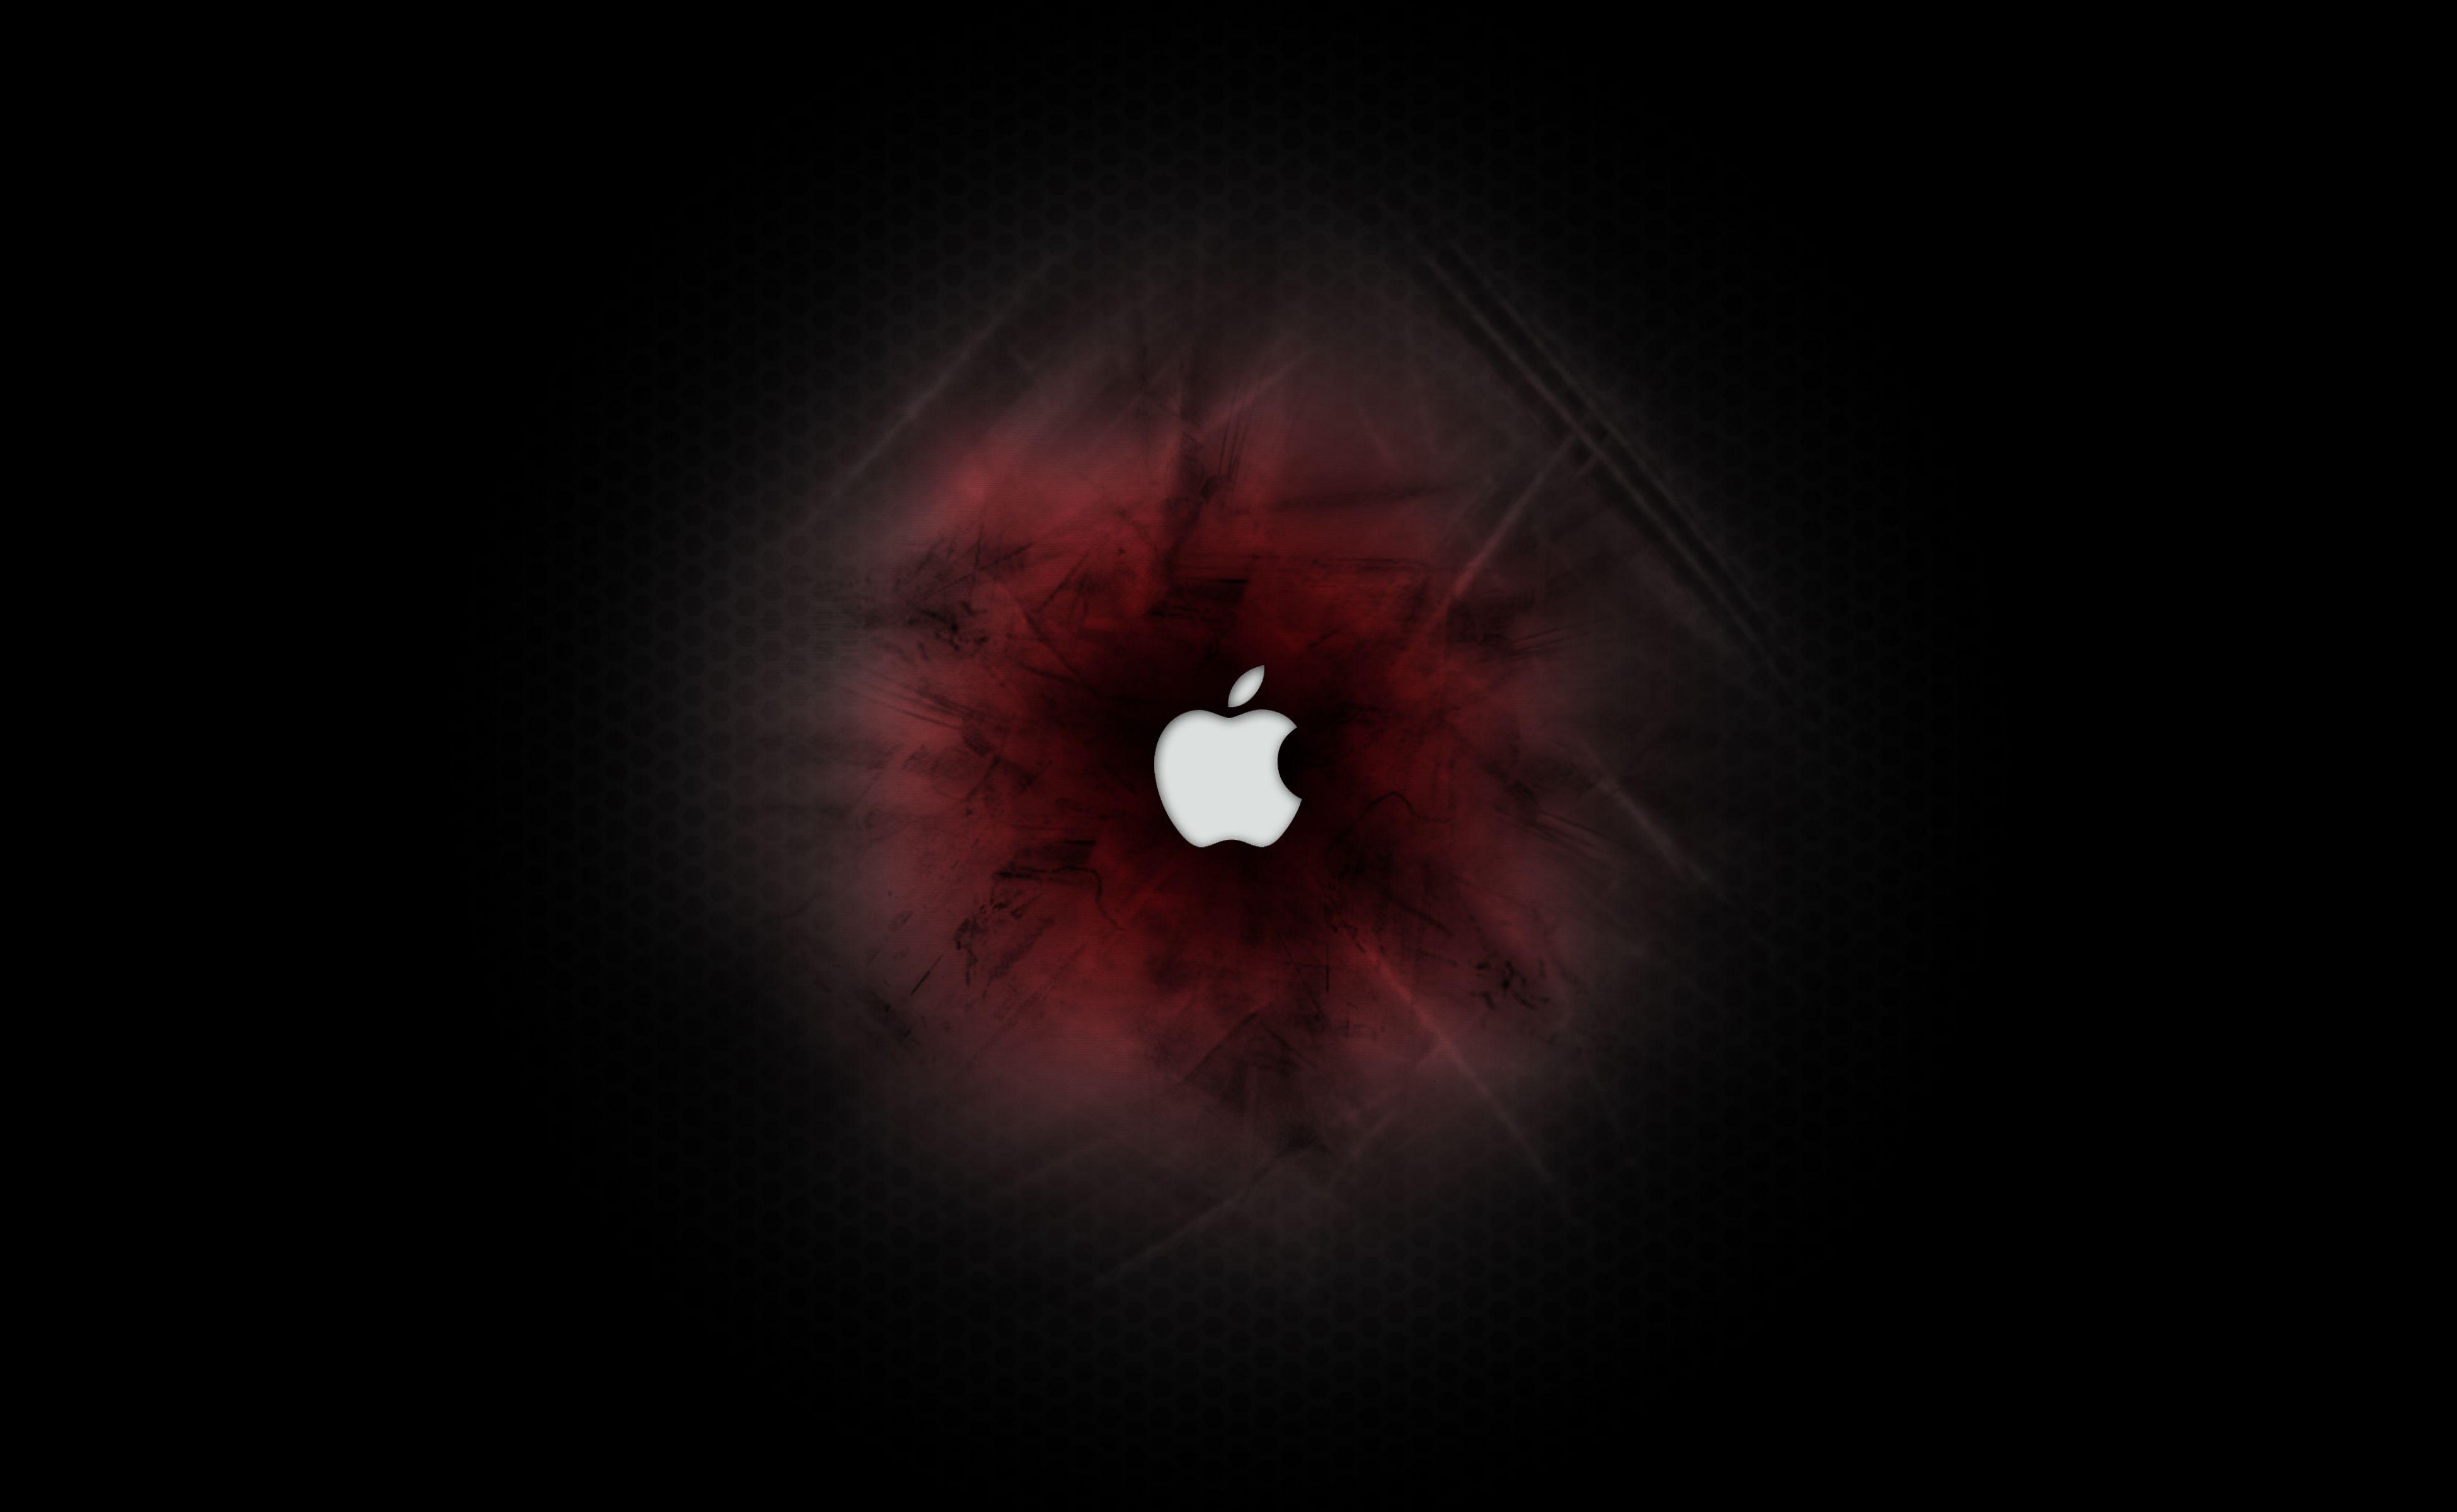 Red Apple background 4k Ultra HD Wallpaper